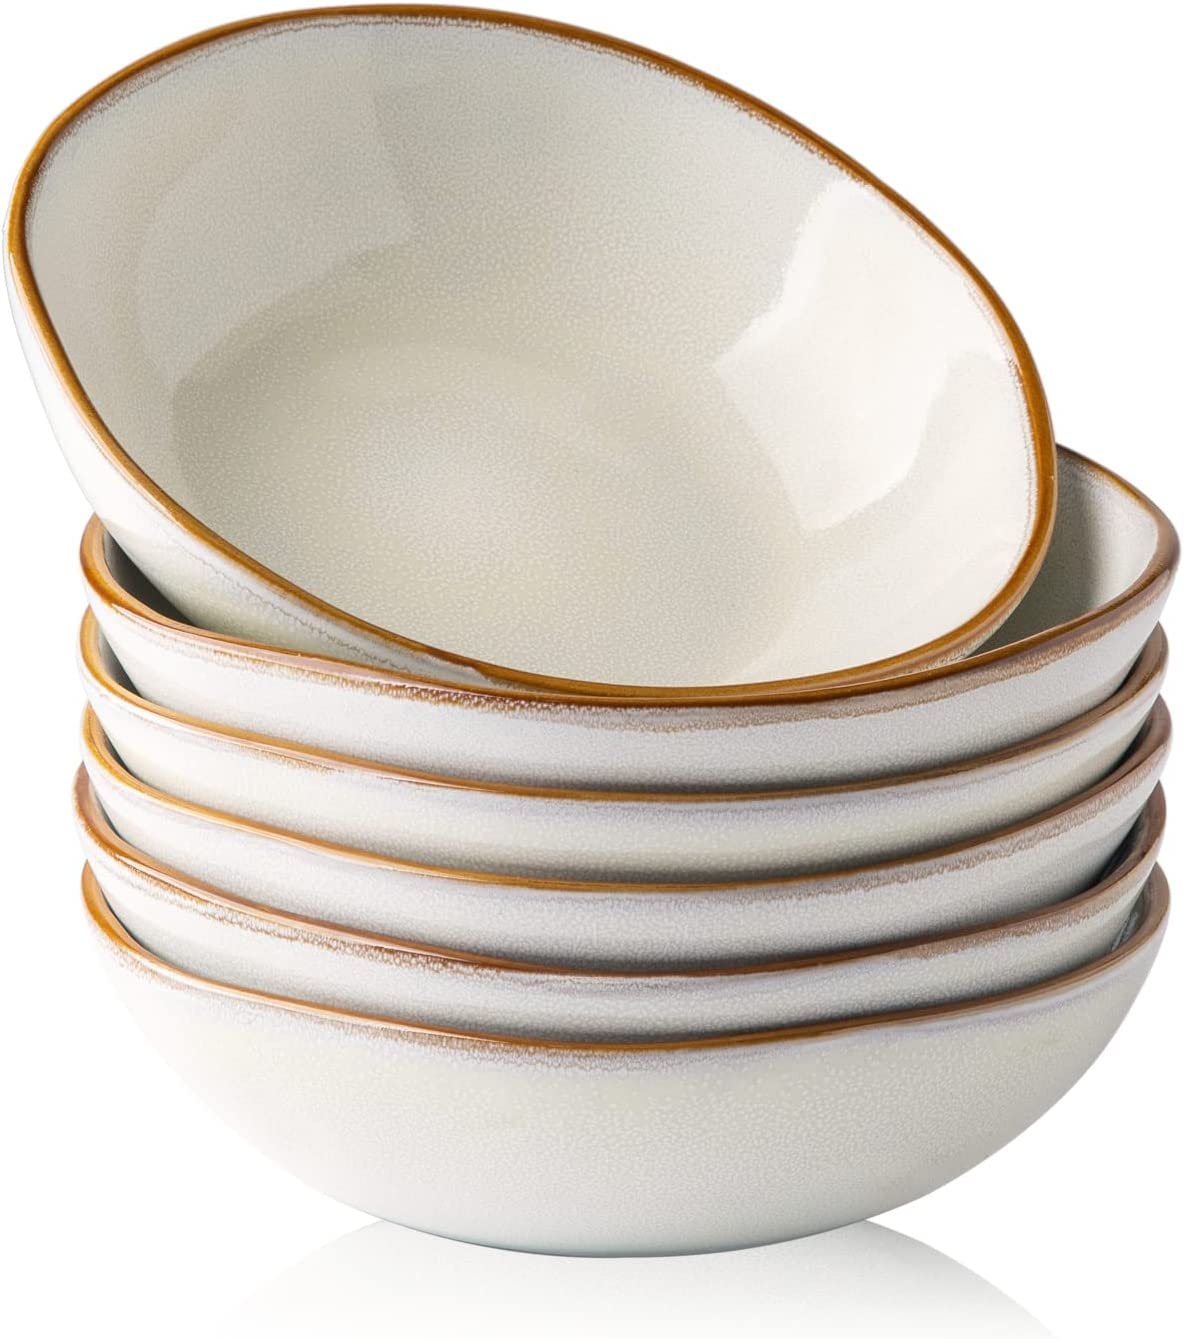 Ceramic Cereal Bowls